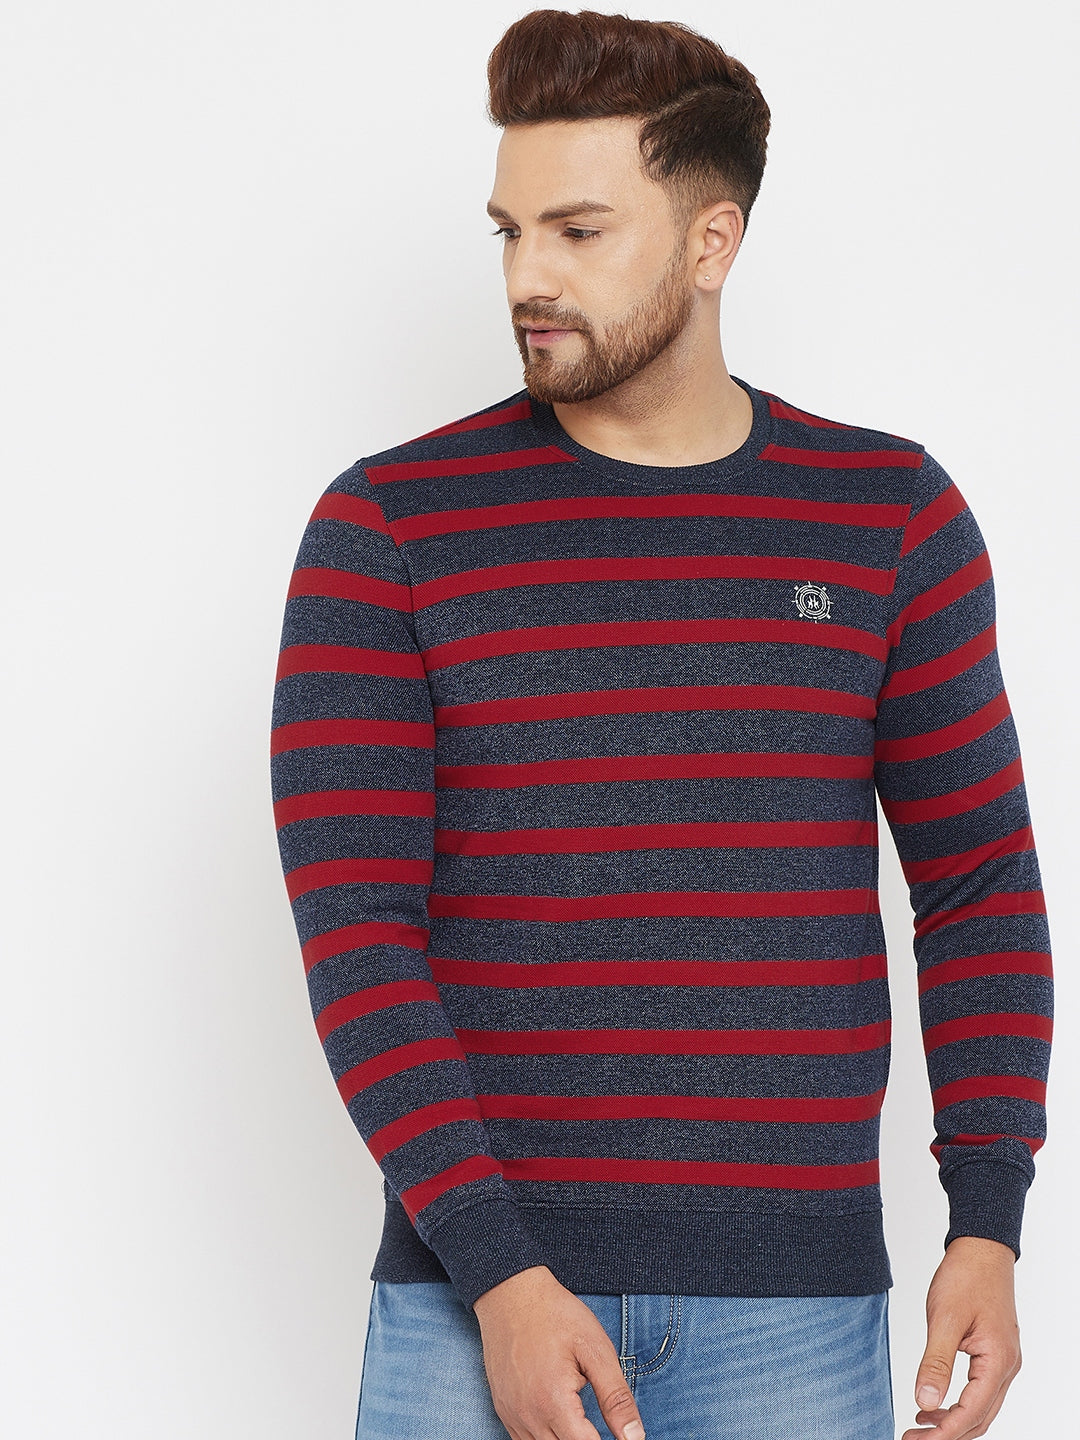 Navy Blue Striped Sweatshirt - Men Sweatshirts